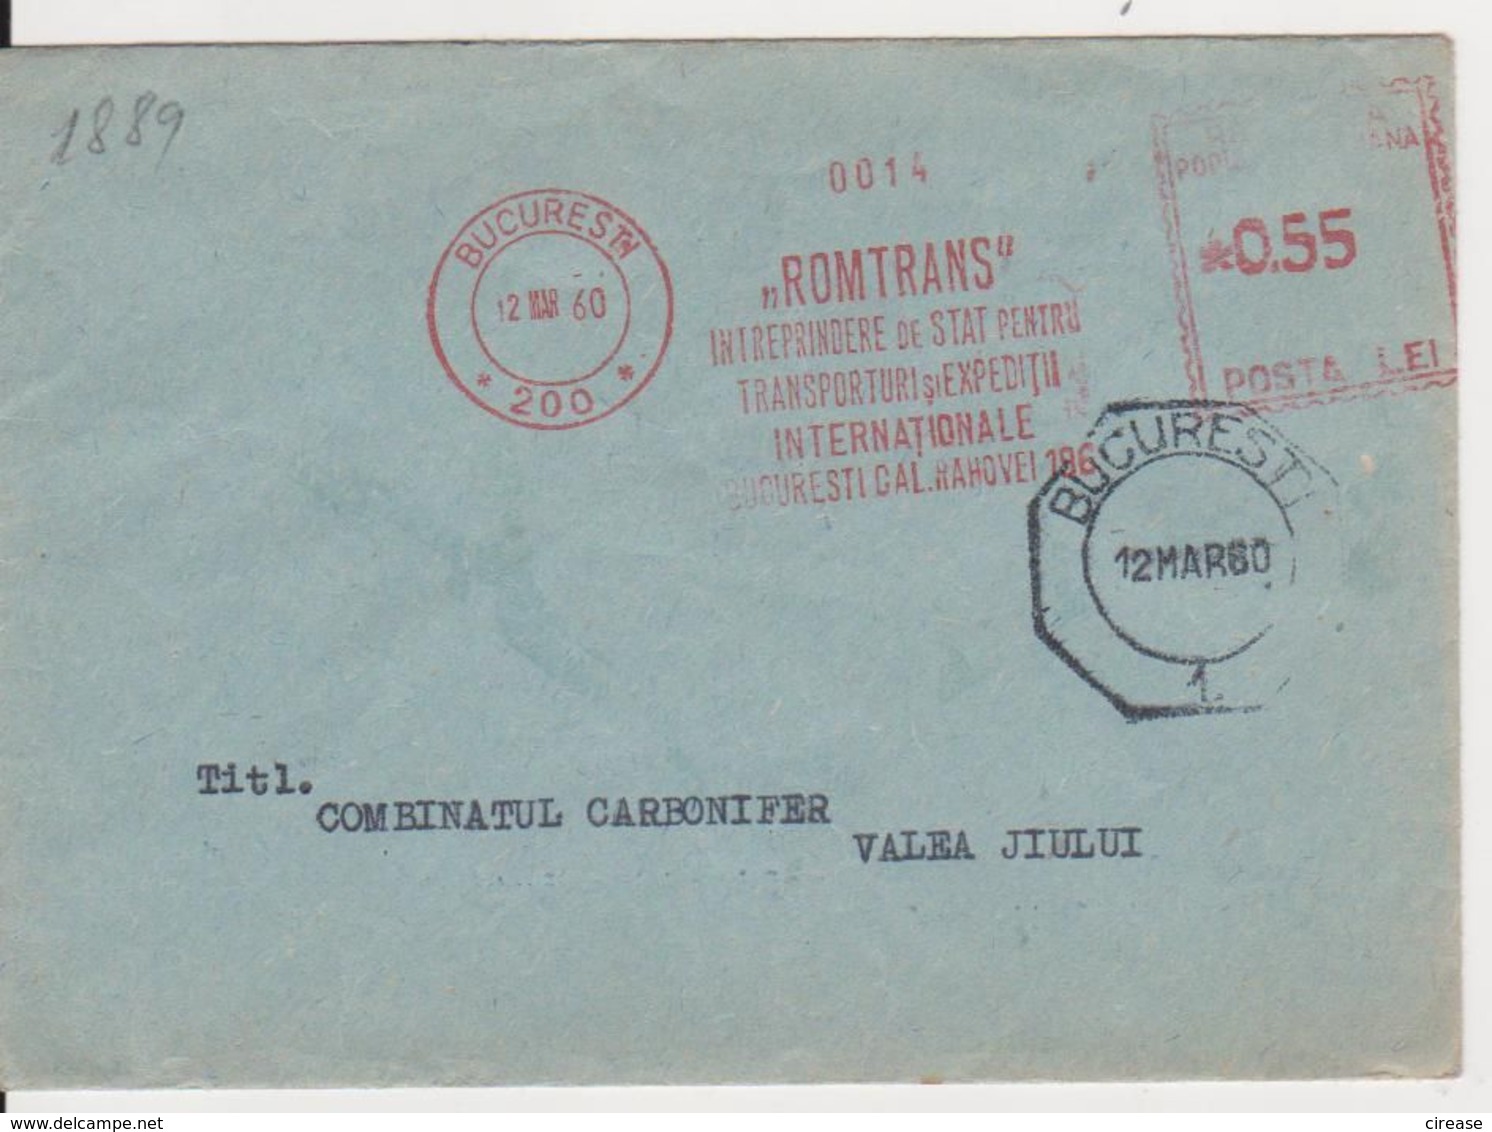 BUCURESTI AMONT 0,55, ROMTRANS INTERNATIONAL TRANSPORT RED MACHINE ATM STAMPS, ROMANIA 1960 - Machines à Affranchir (EMA)